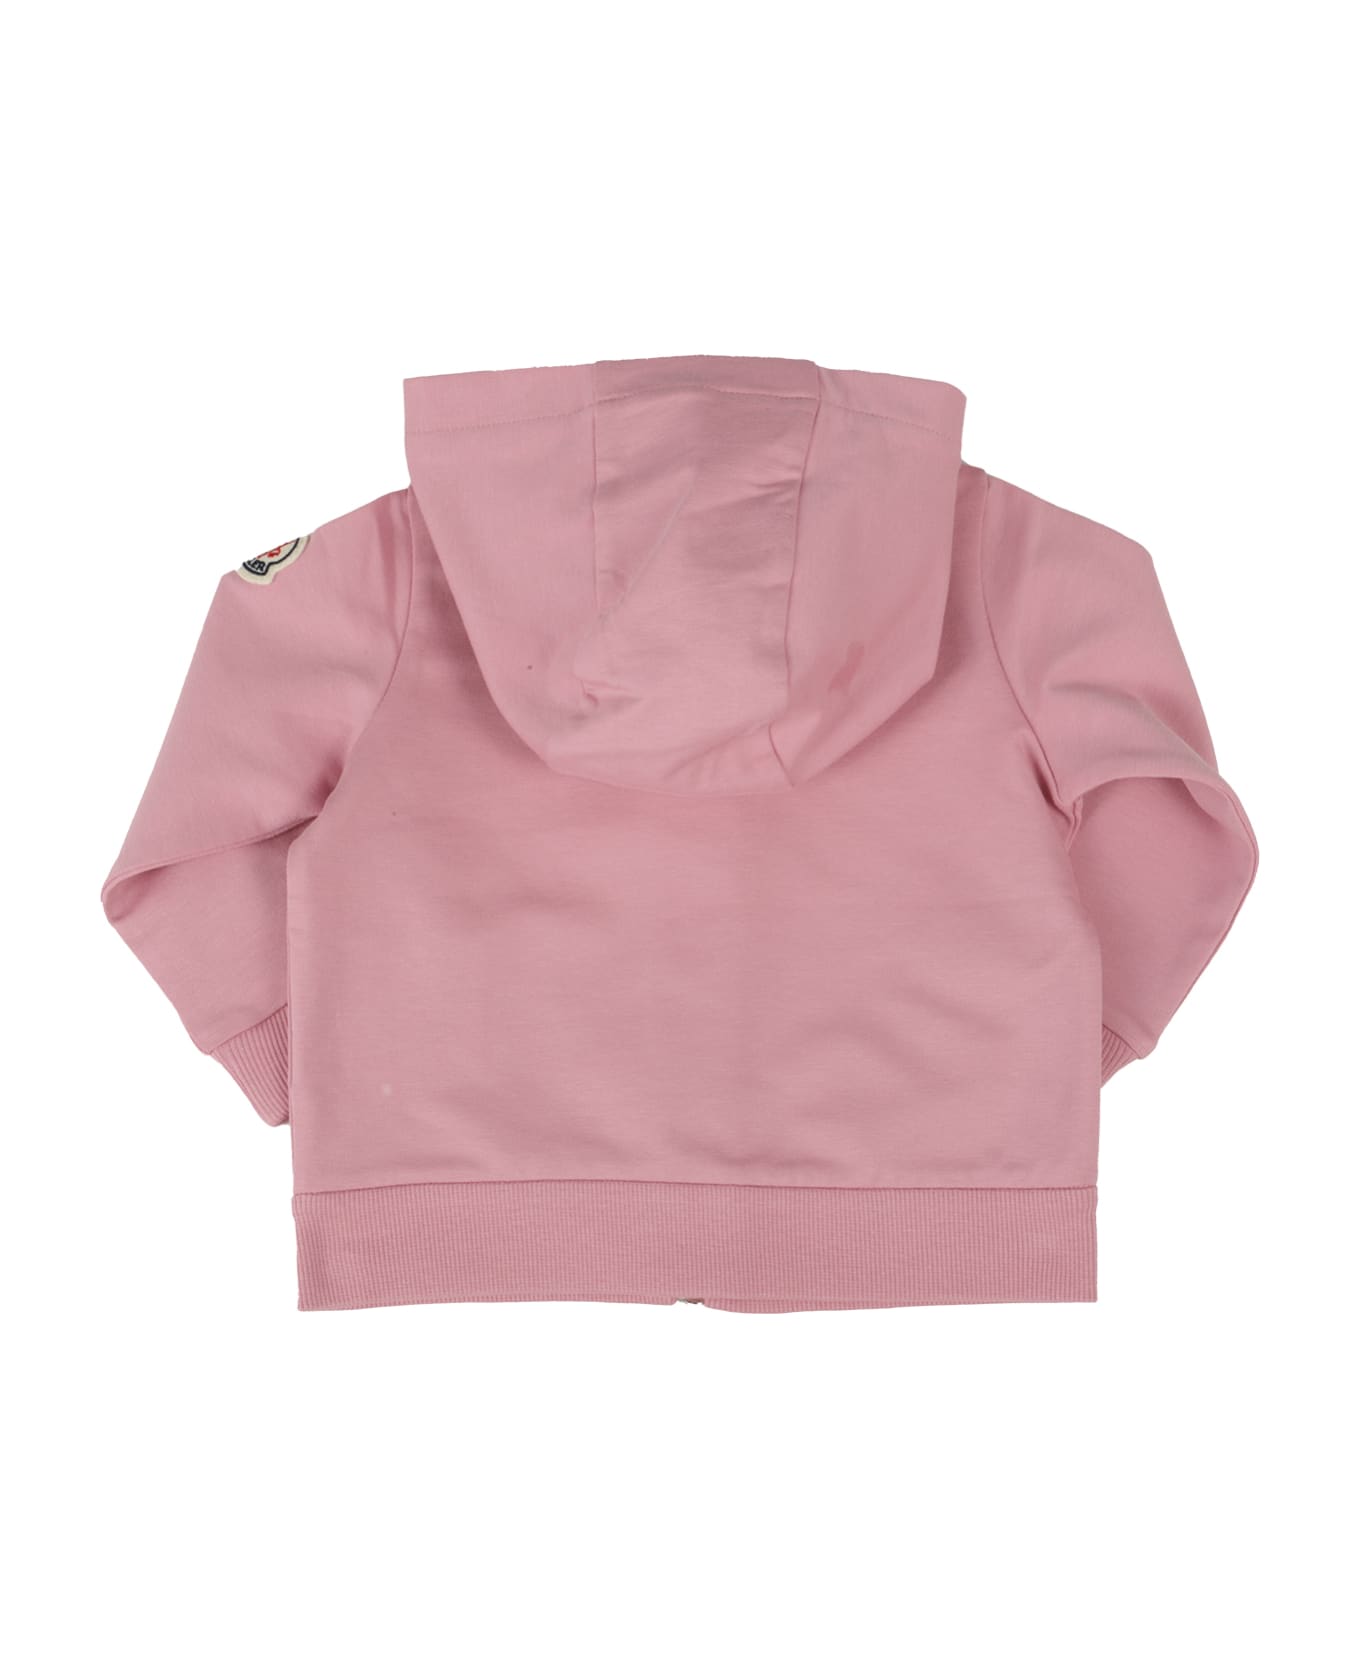 Moncler Sweatshirt - Rosa